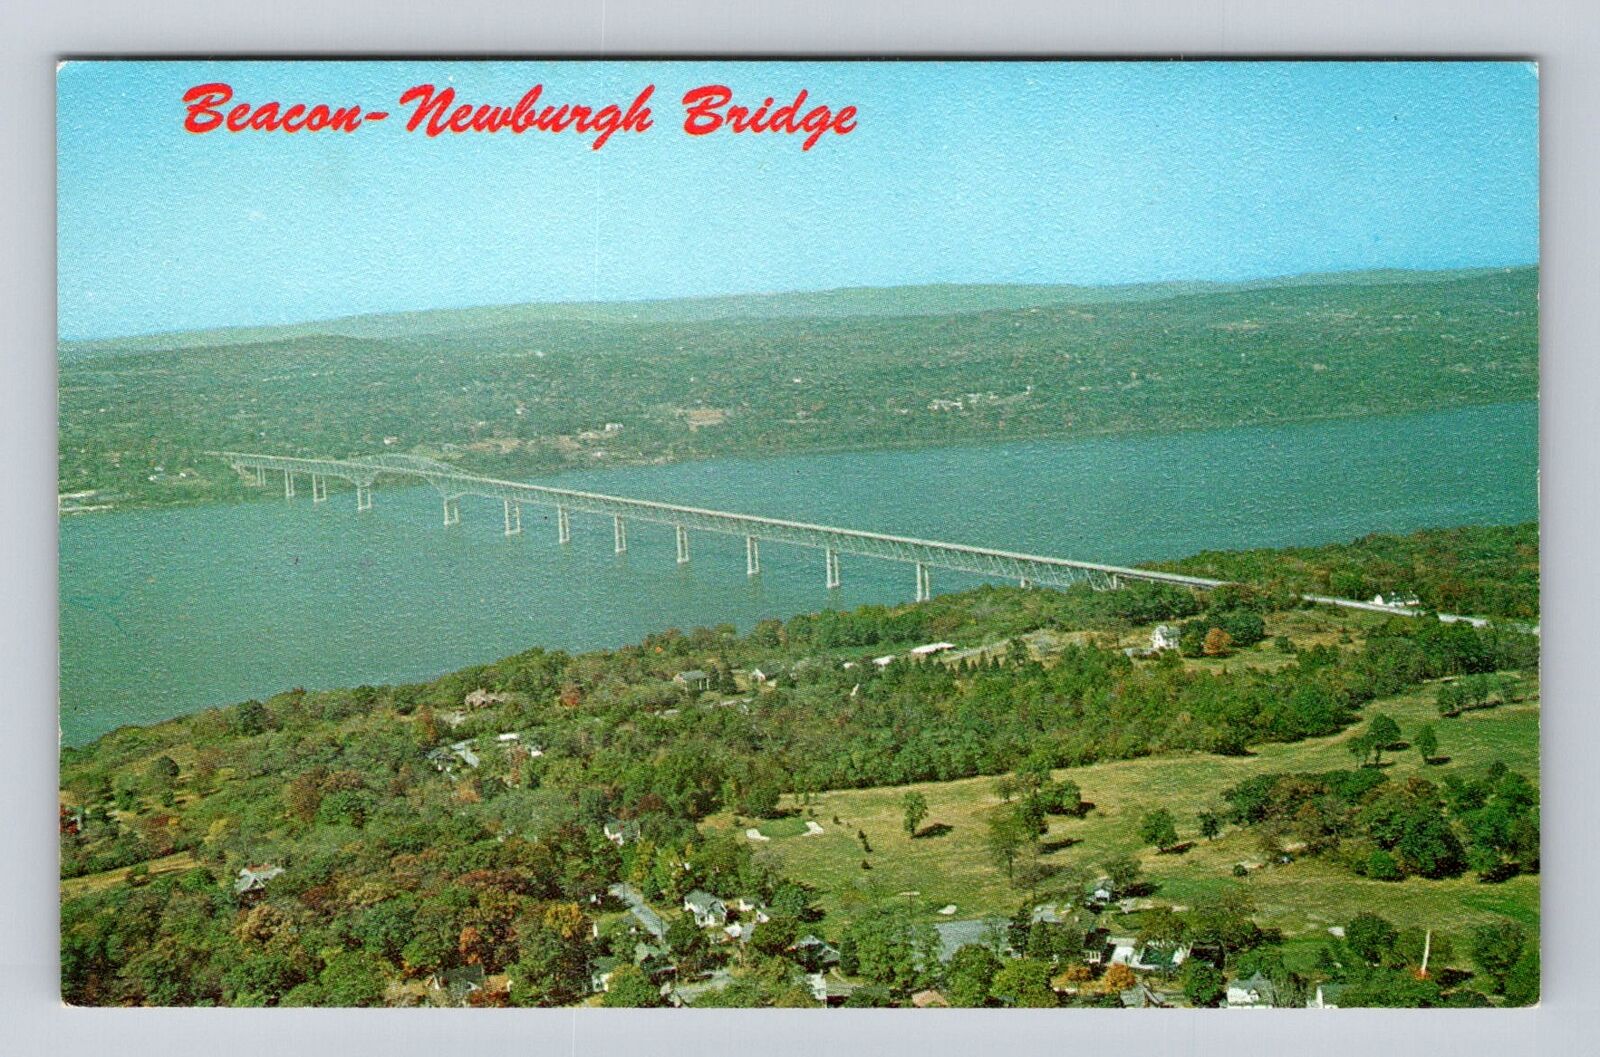 Beacon NY-New York, Beacon Newburgh Bridge, Antique Vintage Souvenir Postcard